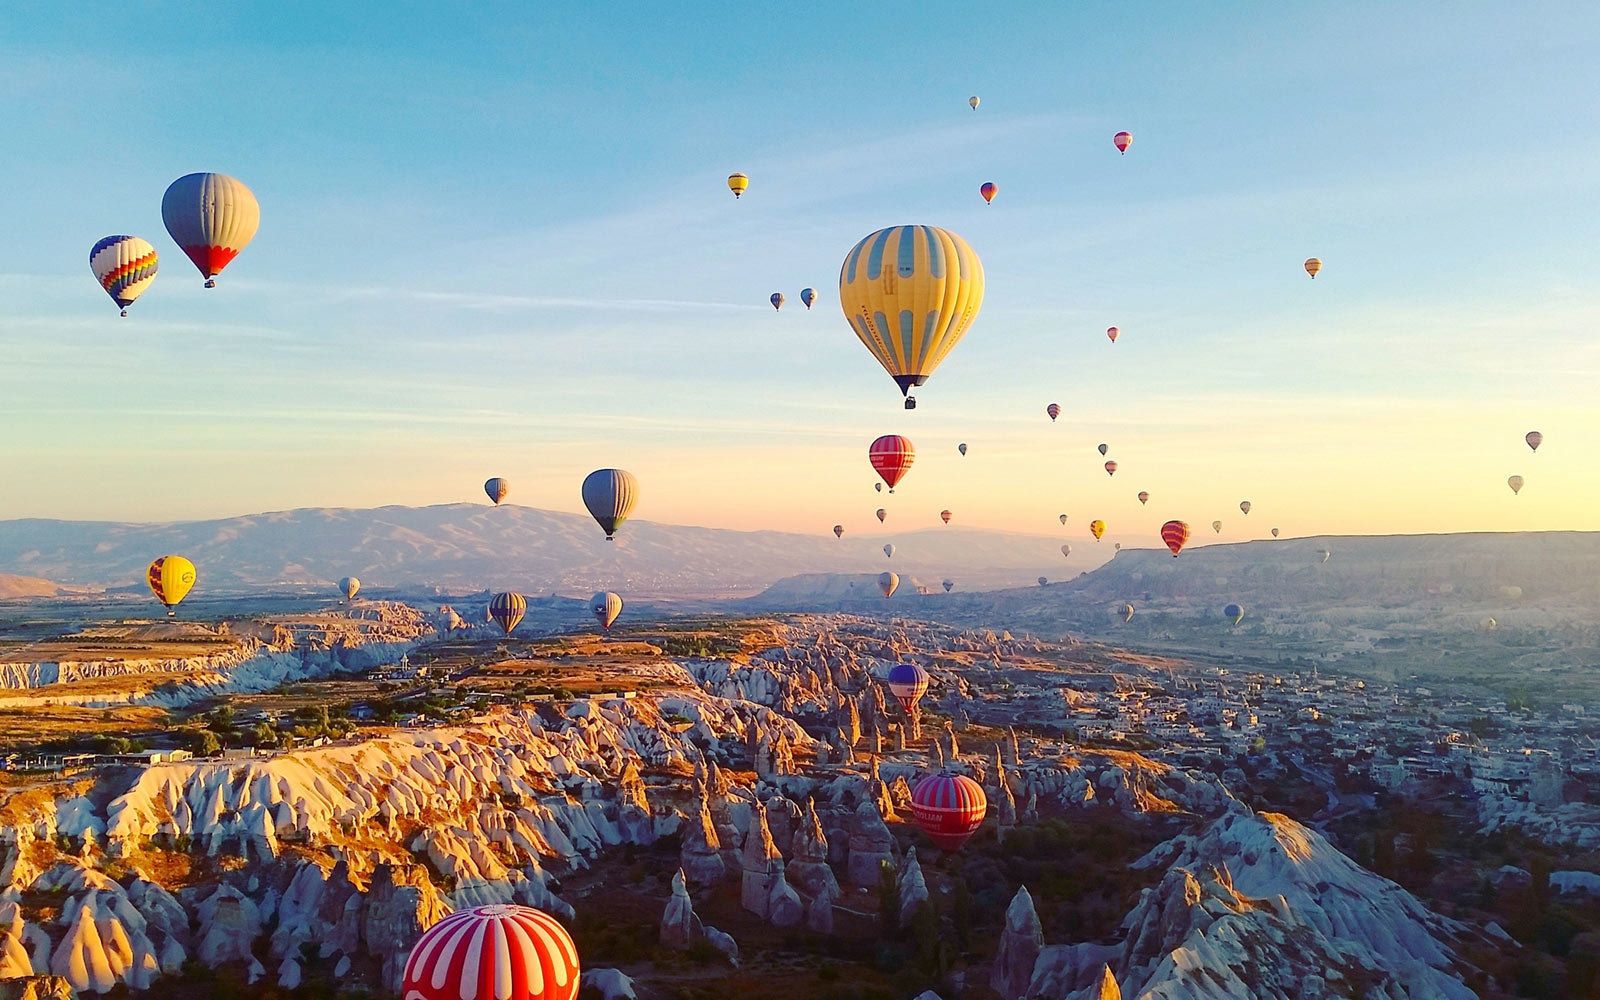 hot-air-balloons-festival-cappadocia-turkey-hotair0605-b5d5bb7f47c2a6aaf50a22d0f0ce55c8.jpg